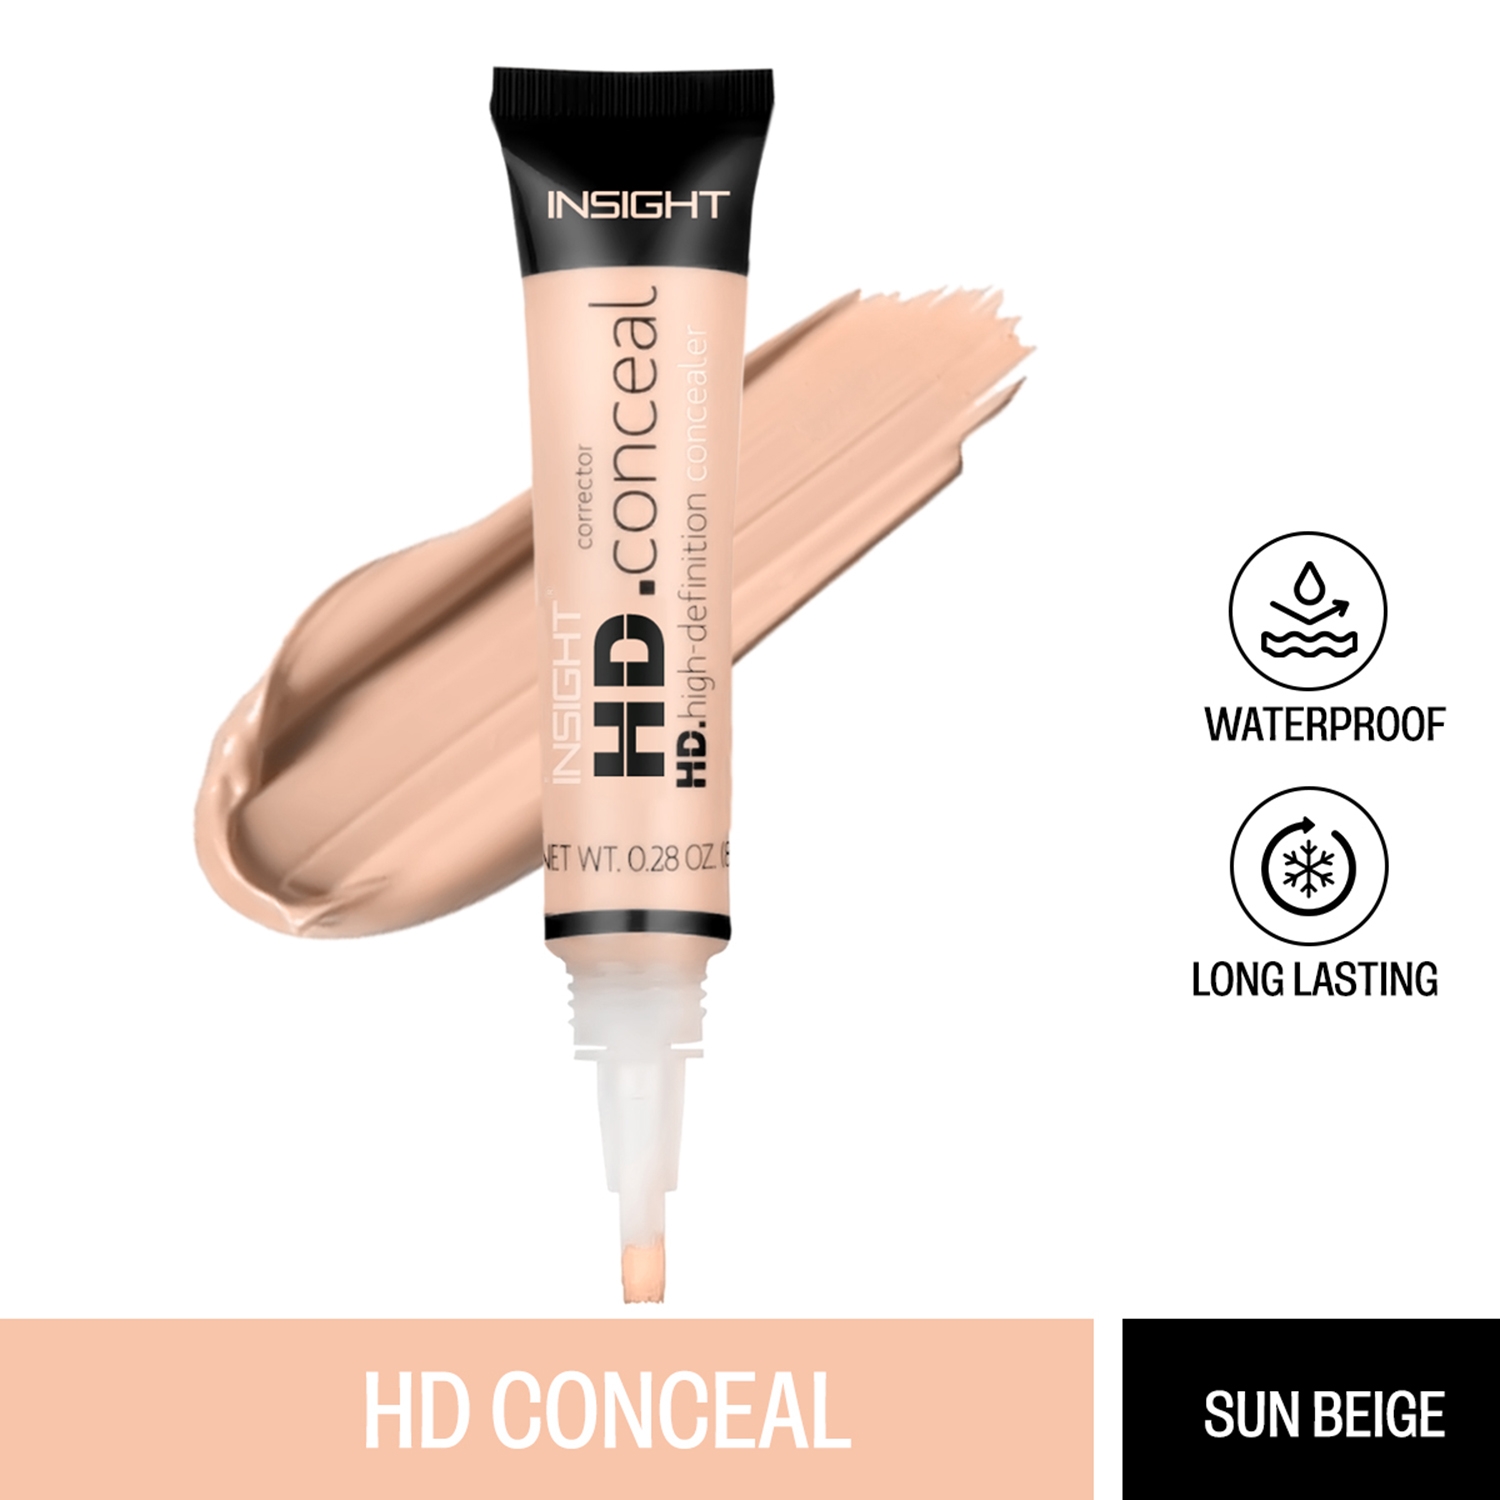 Insight Cosmetics | Insight Cosmetics HD Conceal - Sun Beige (8g)